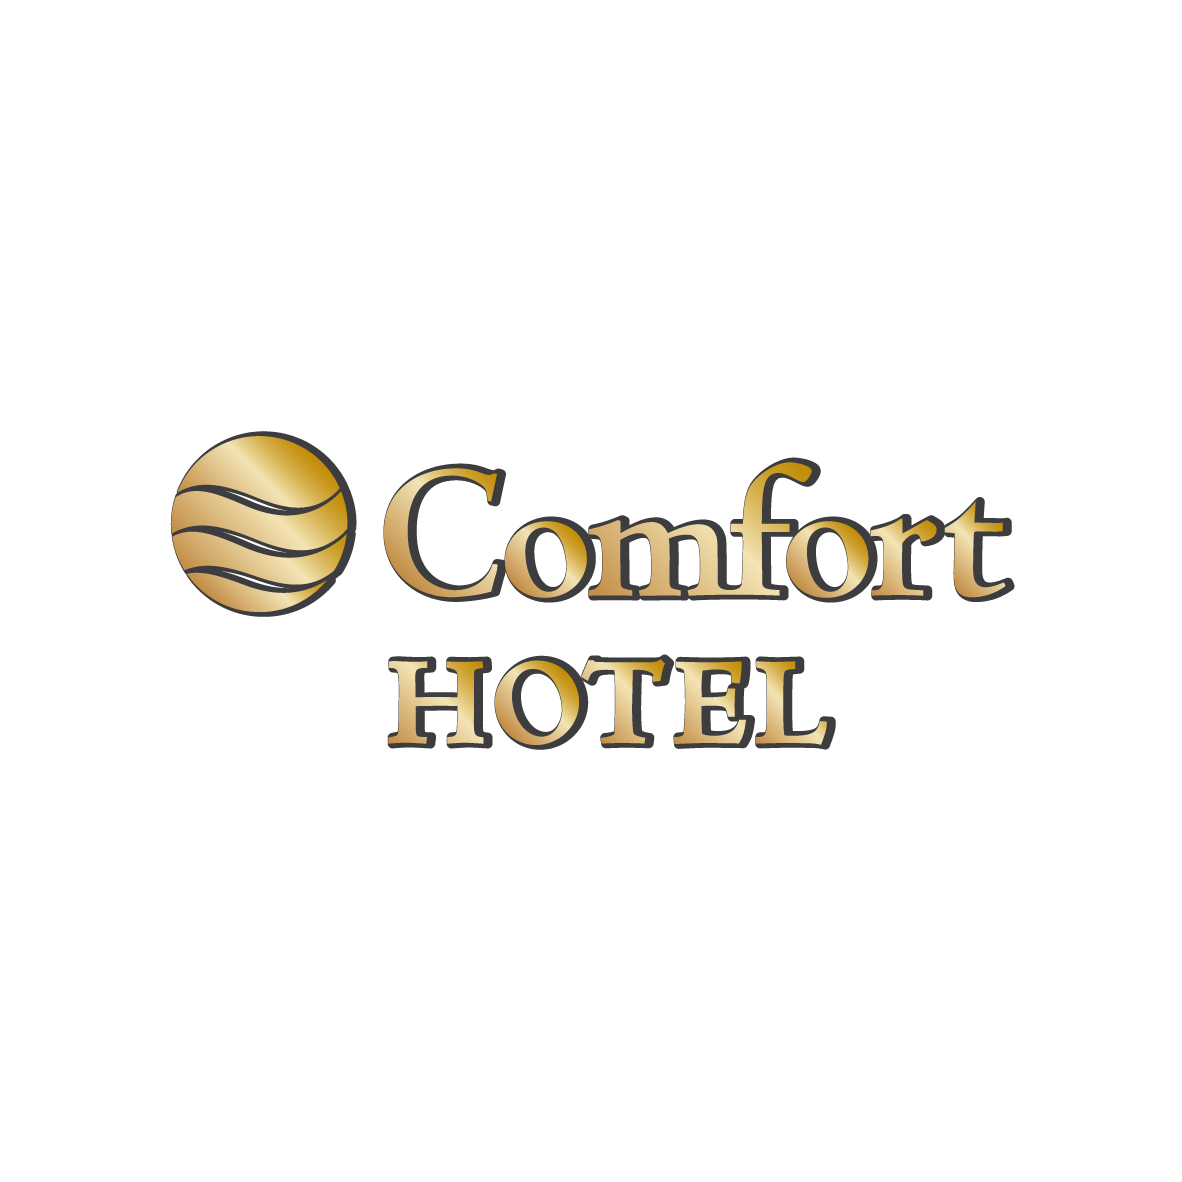 07 - Comfort Hotel_Tavola disegno 1